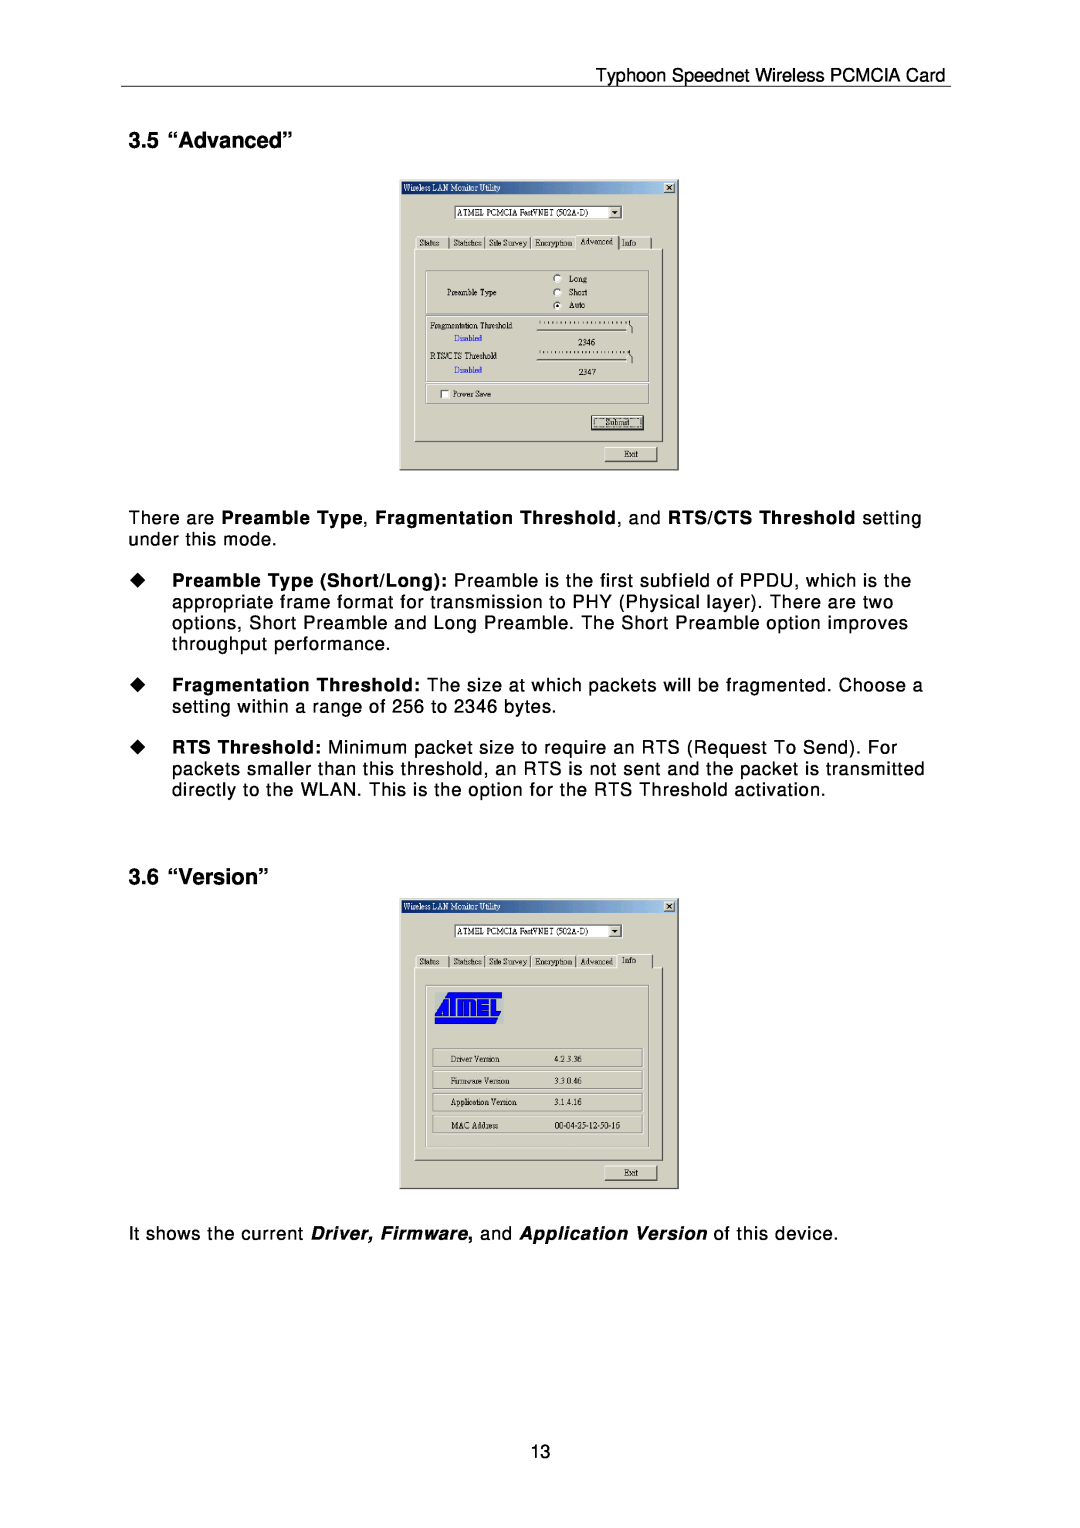 ANUBIS SPEEDNET WIRELESS PCMCIA CARD instruction manual 3.5 “Advanced”, 3.6 “Version” 